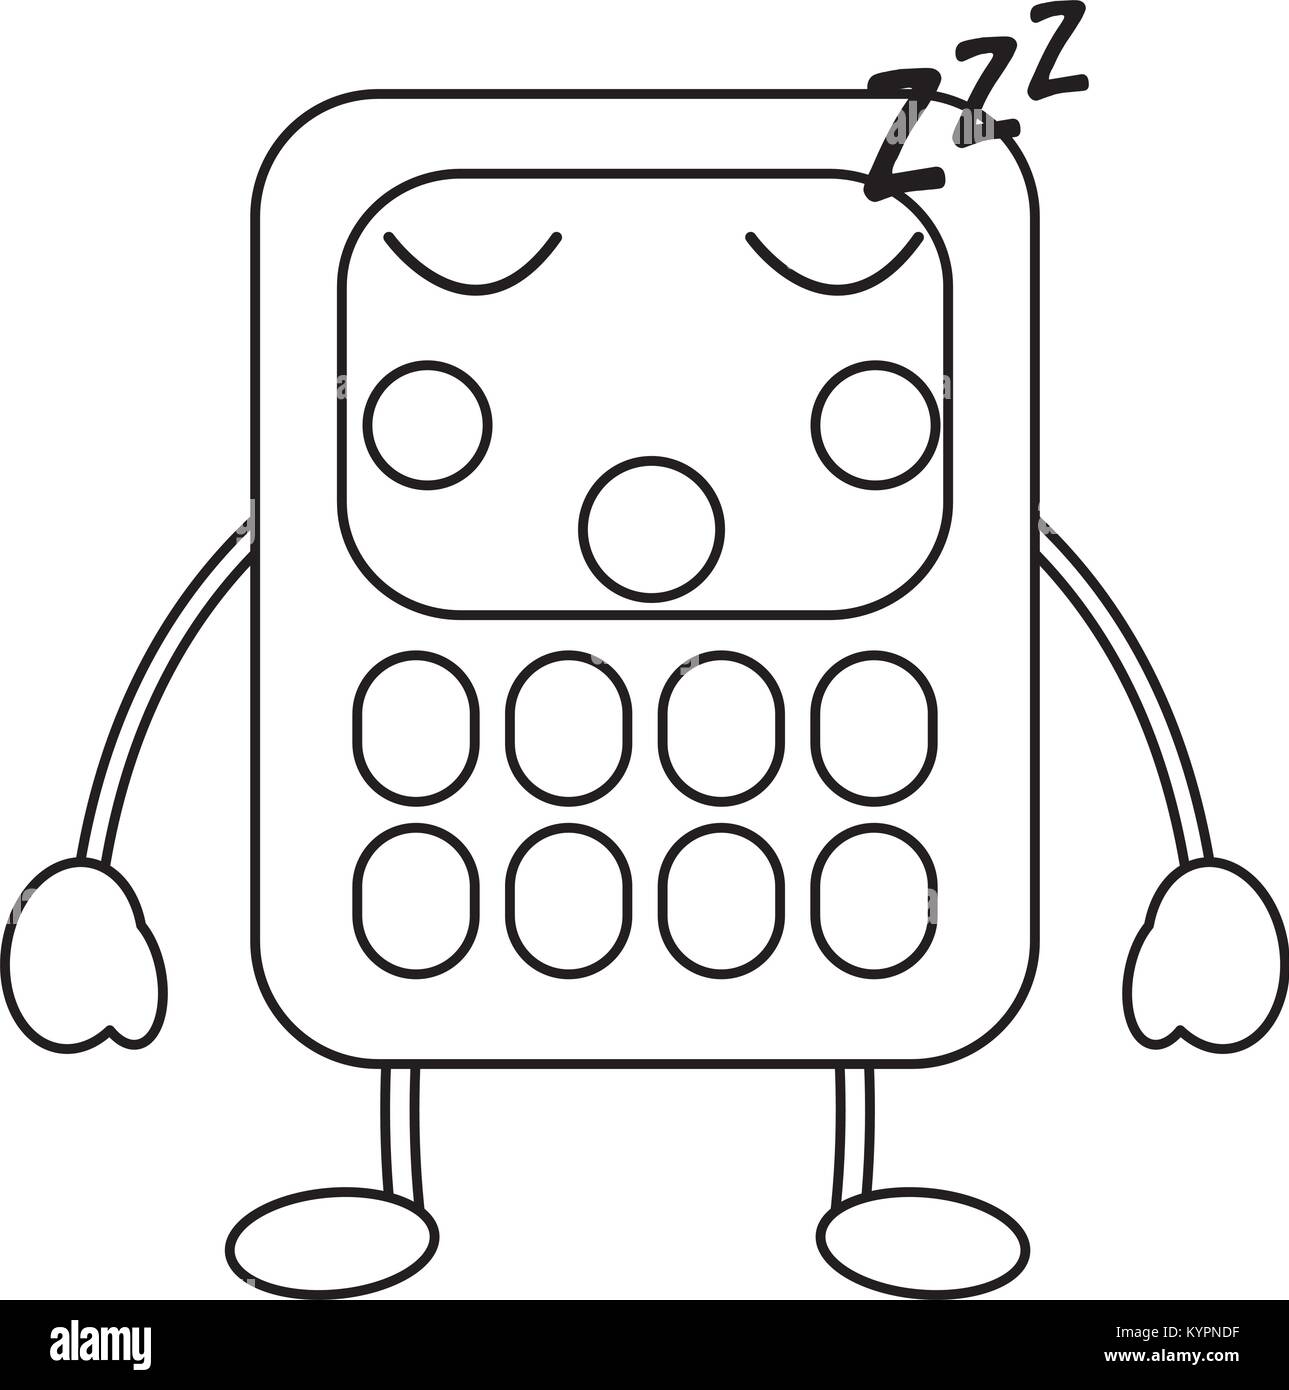 Calculatrices scolaires kawaii cartoon character Illustration de Vecteur